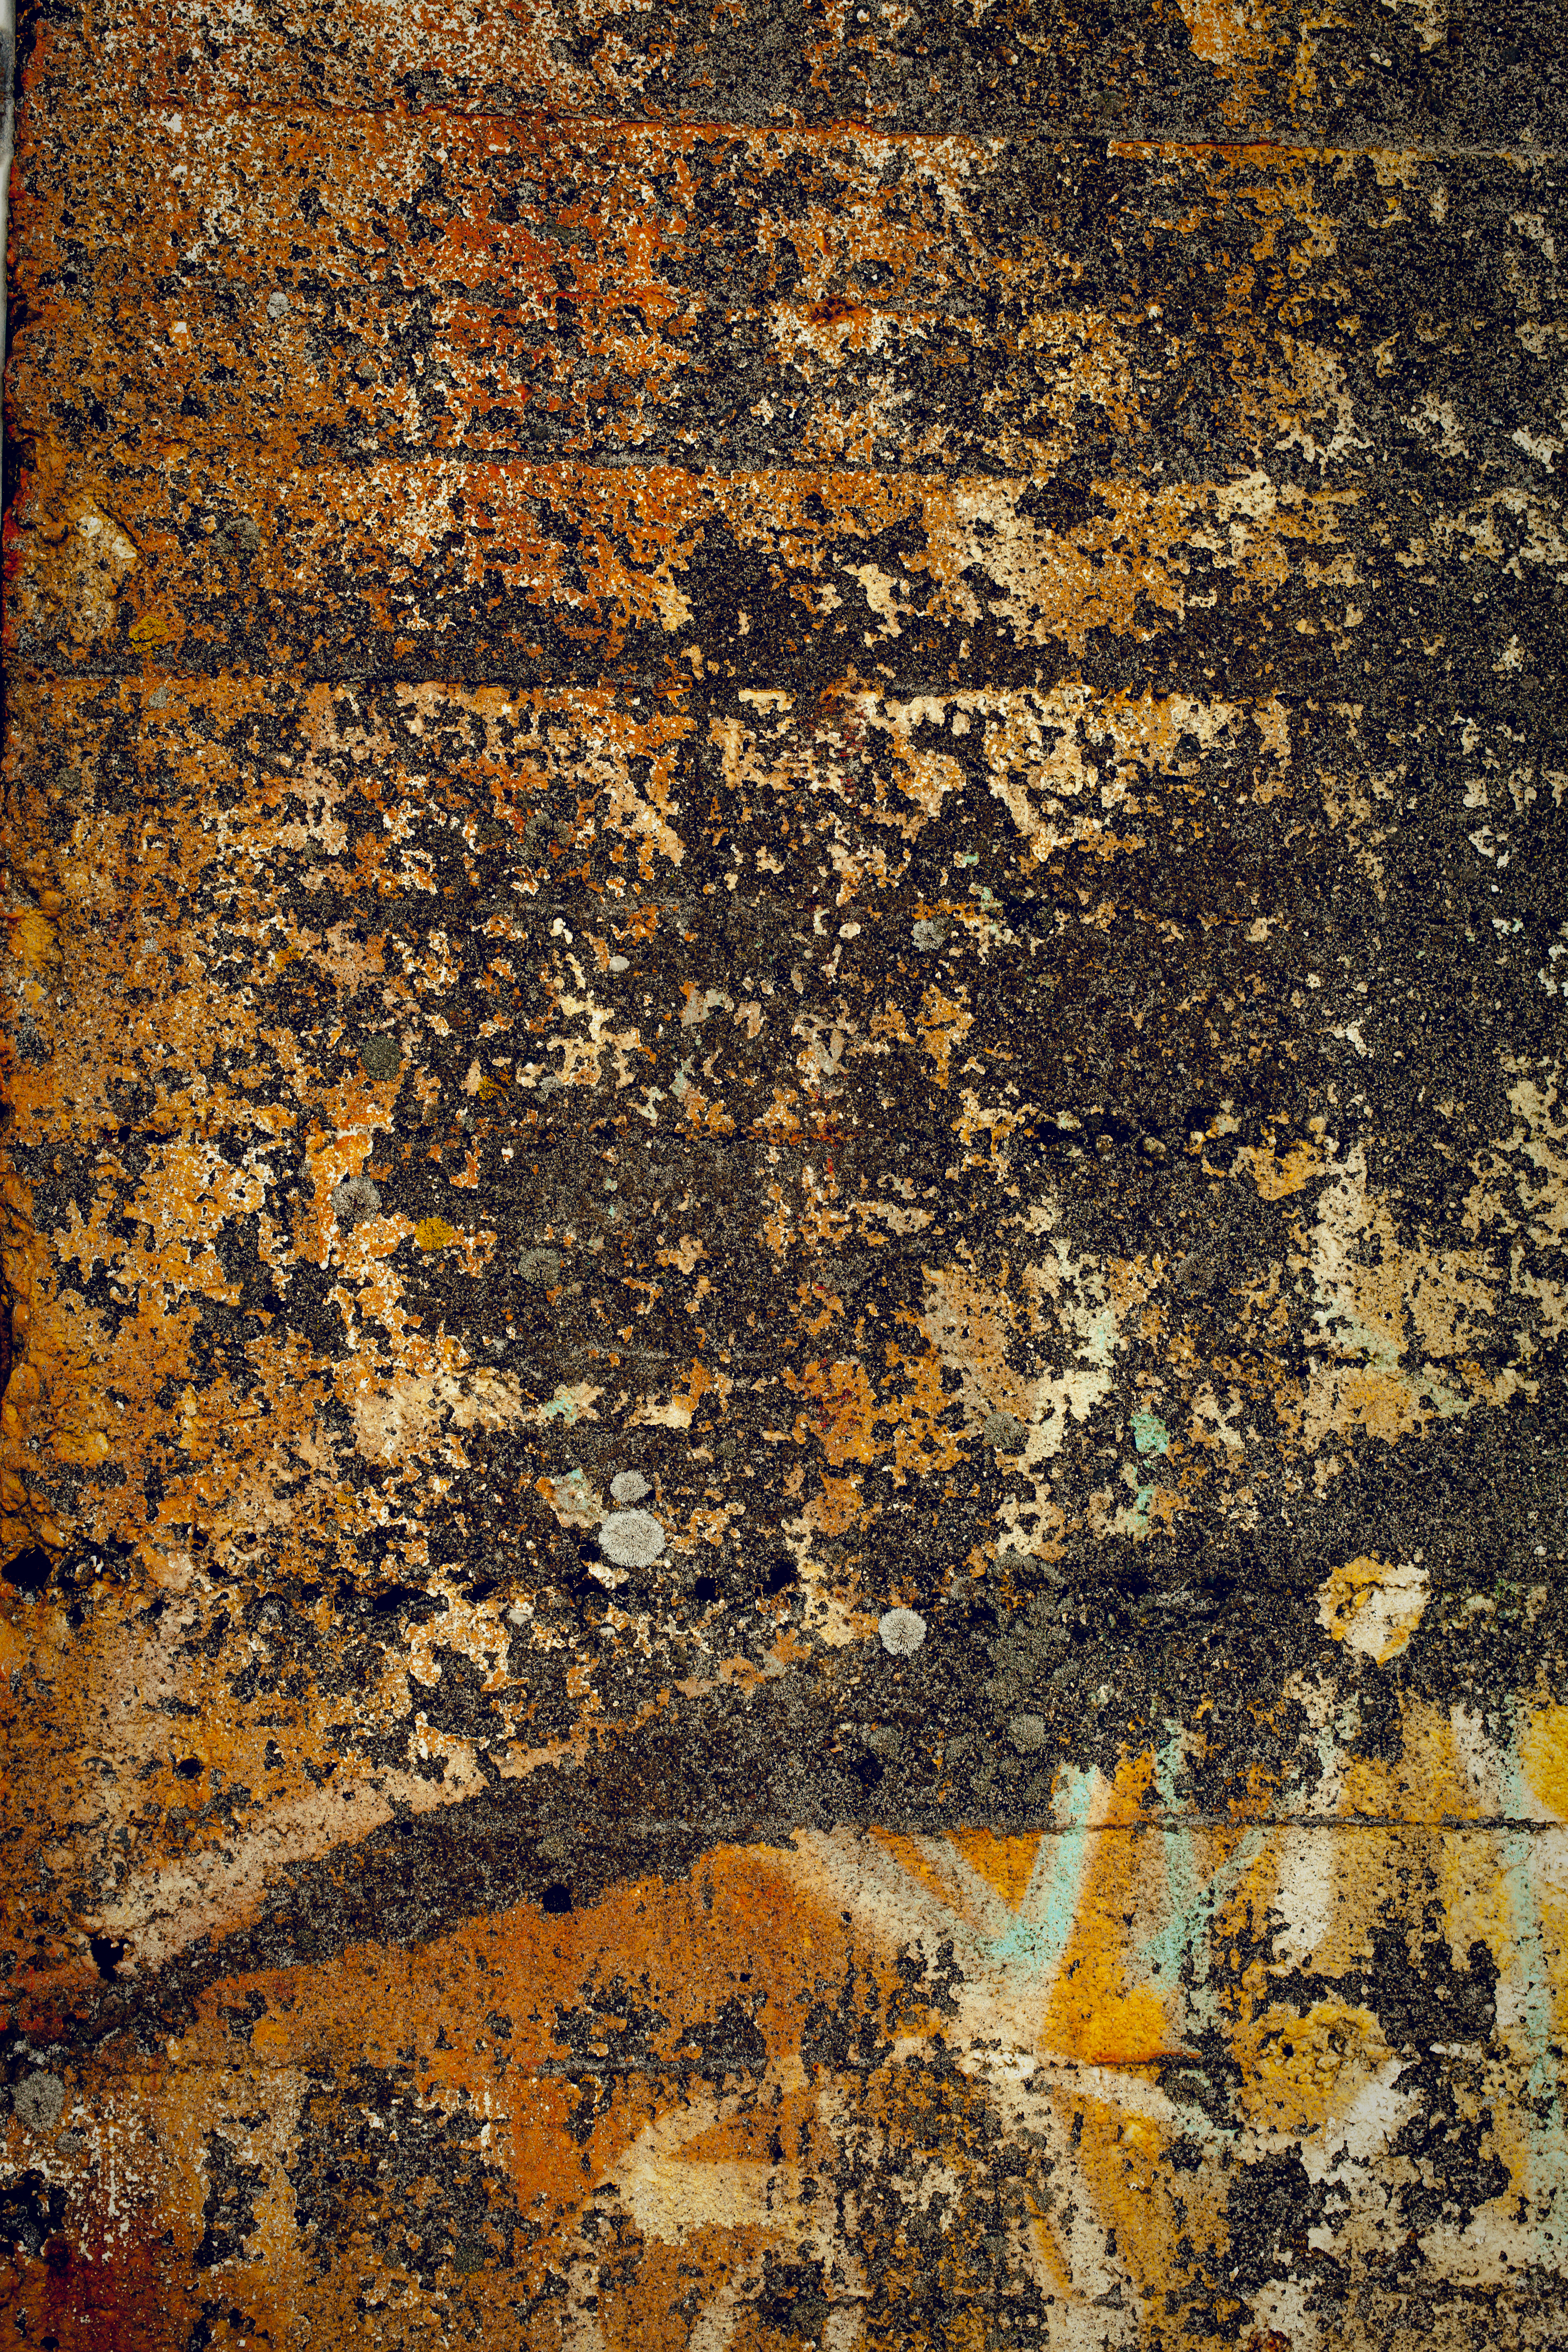 Yellow Grunge Concrete Textures | Freebies | Stockvault.net Blog